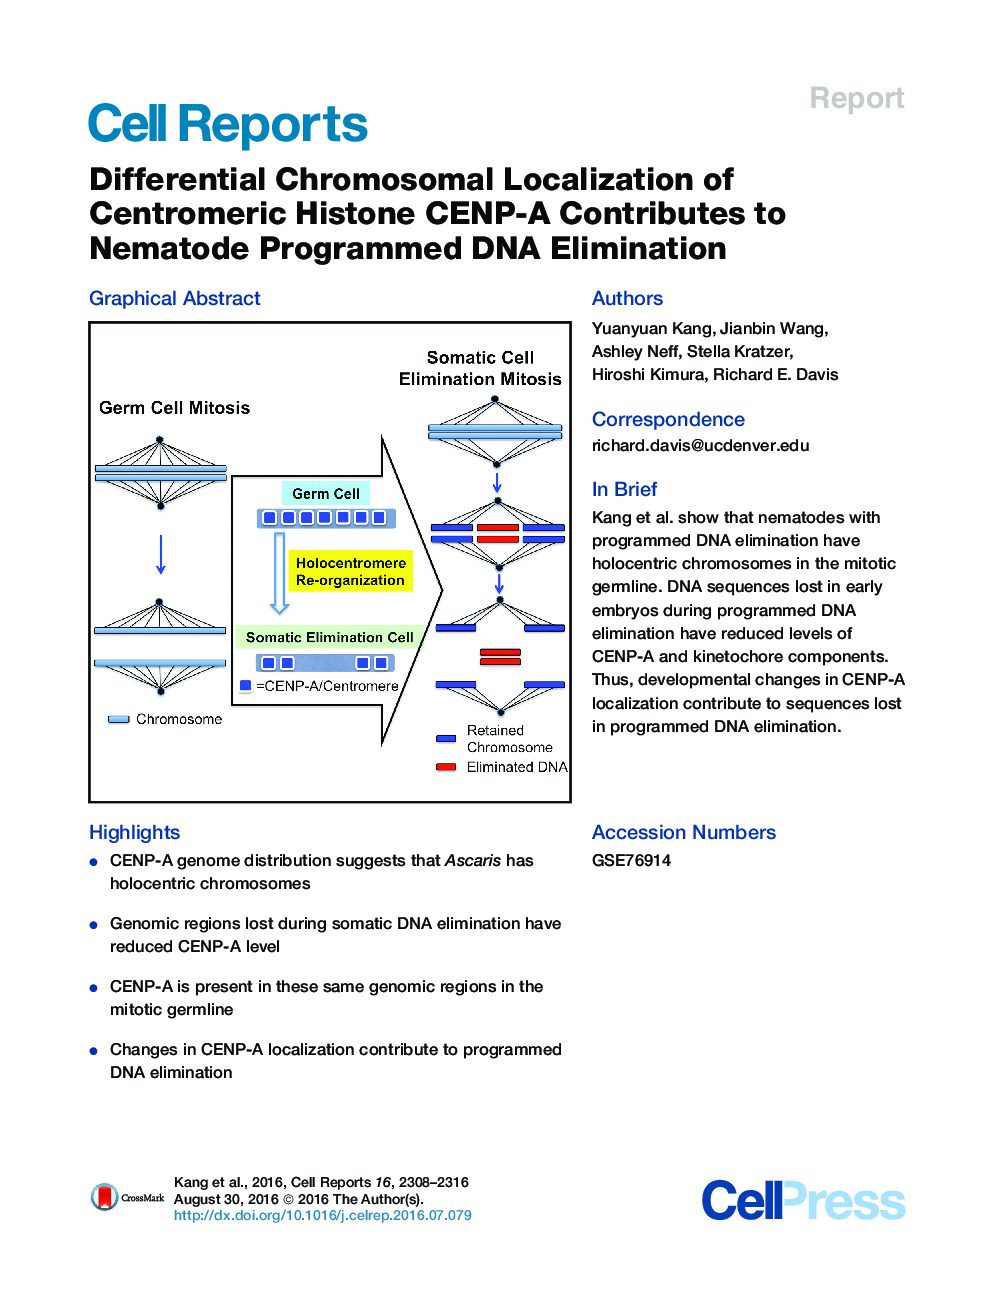 Differential Chromosomal Localization of Centromeric Histone CENP-A Contributes to Nematode Programmed DNA Elimination